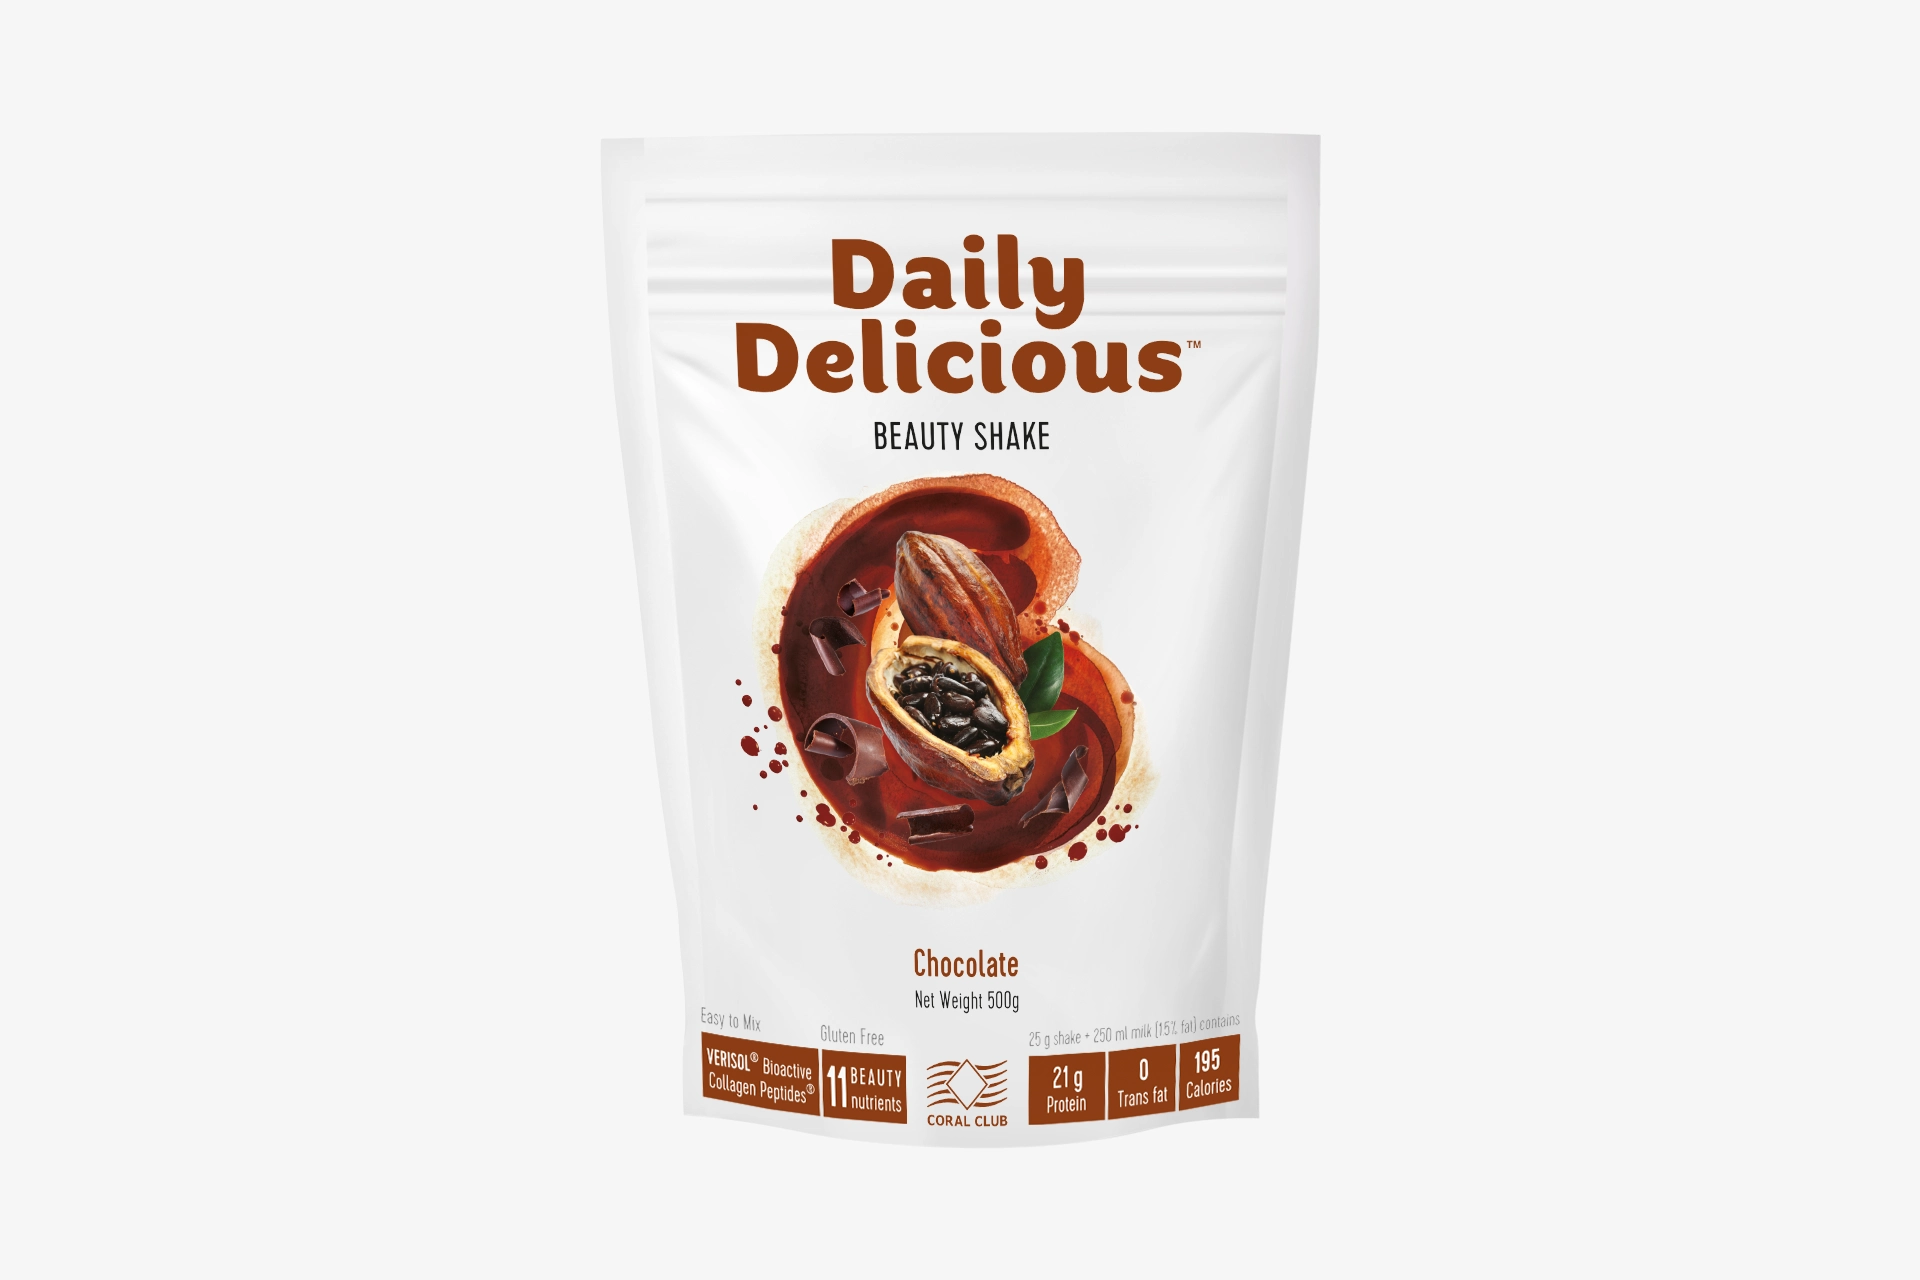 Daily Delicious Beauty Shake Csokoládé